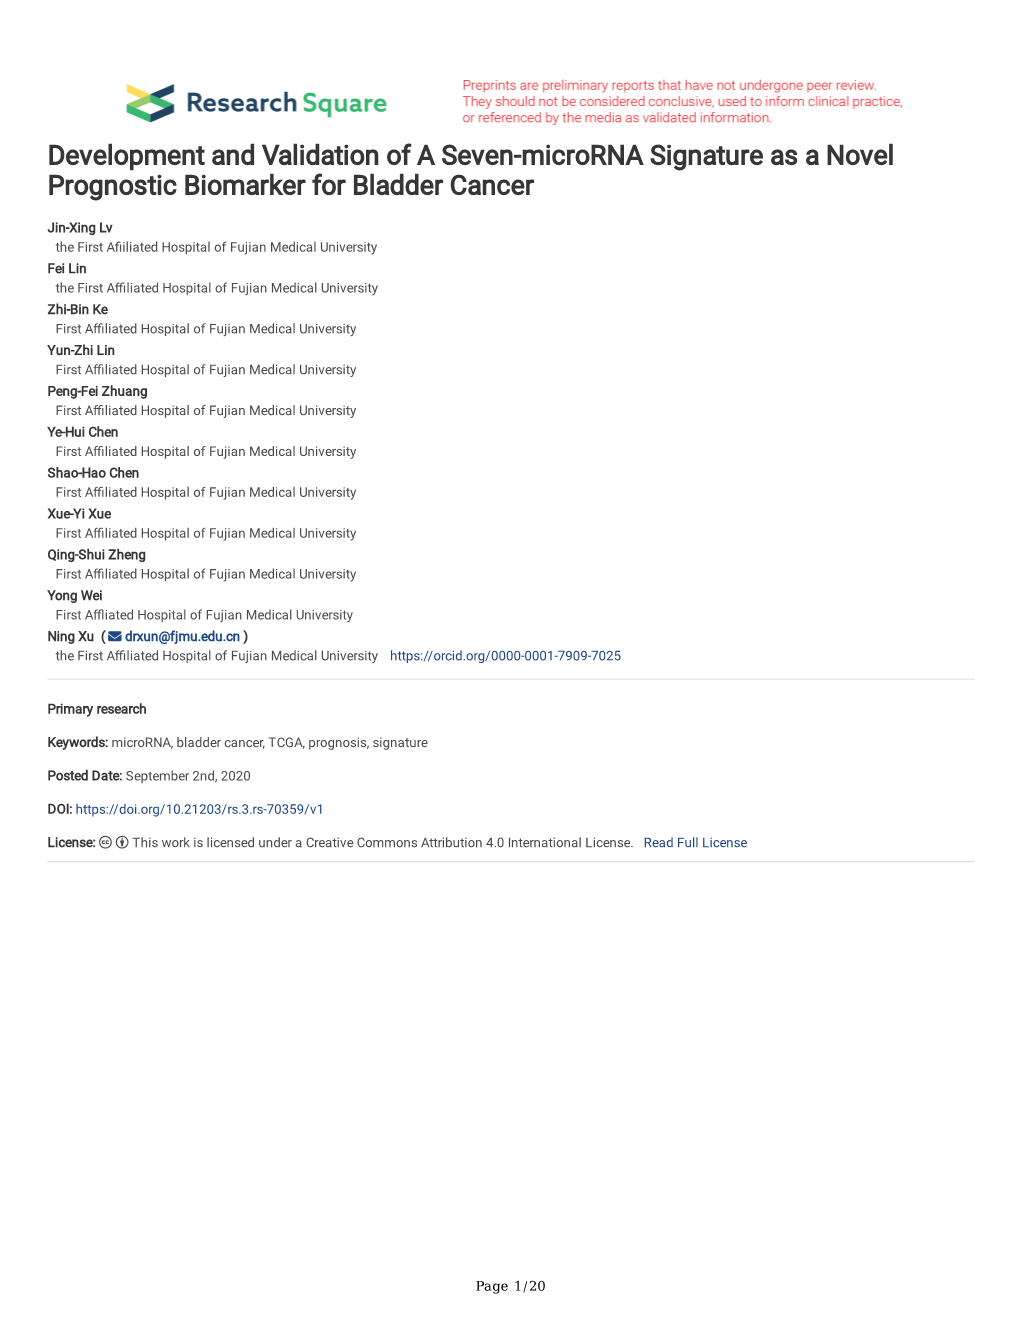 Development and Validation of a Seven-Microrna Signature As a Novel Prognostic Biomarker for Bladder Cancer